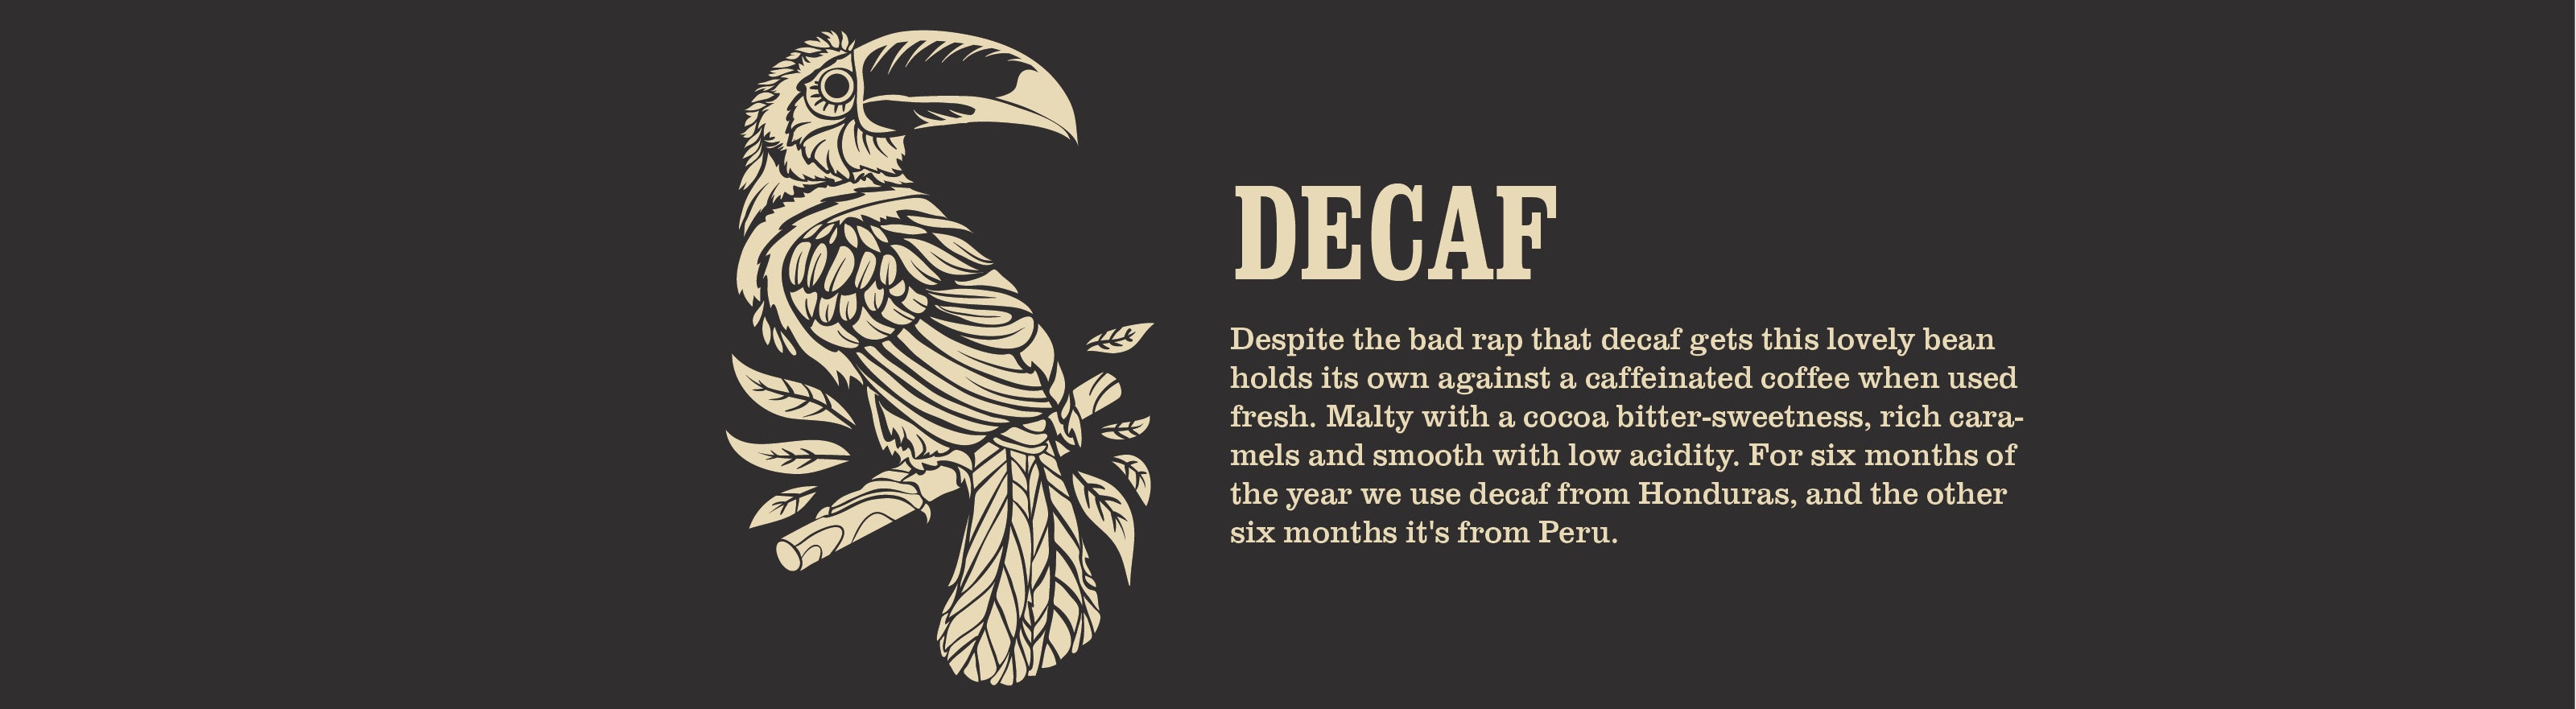 decaf honduras coffee informational image